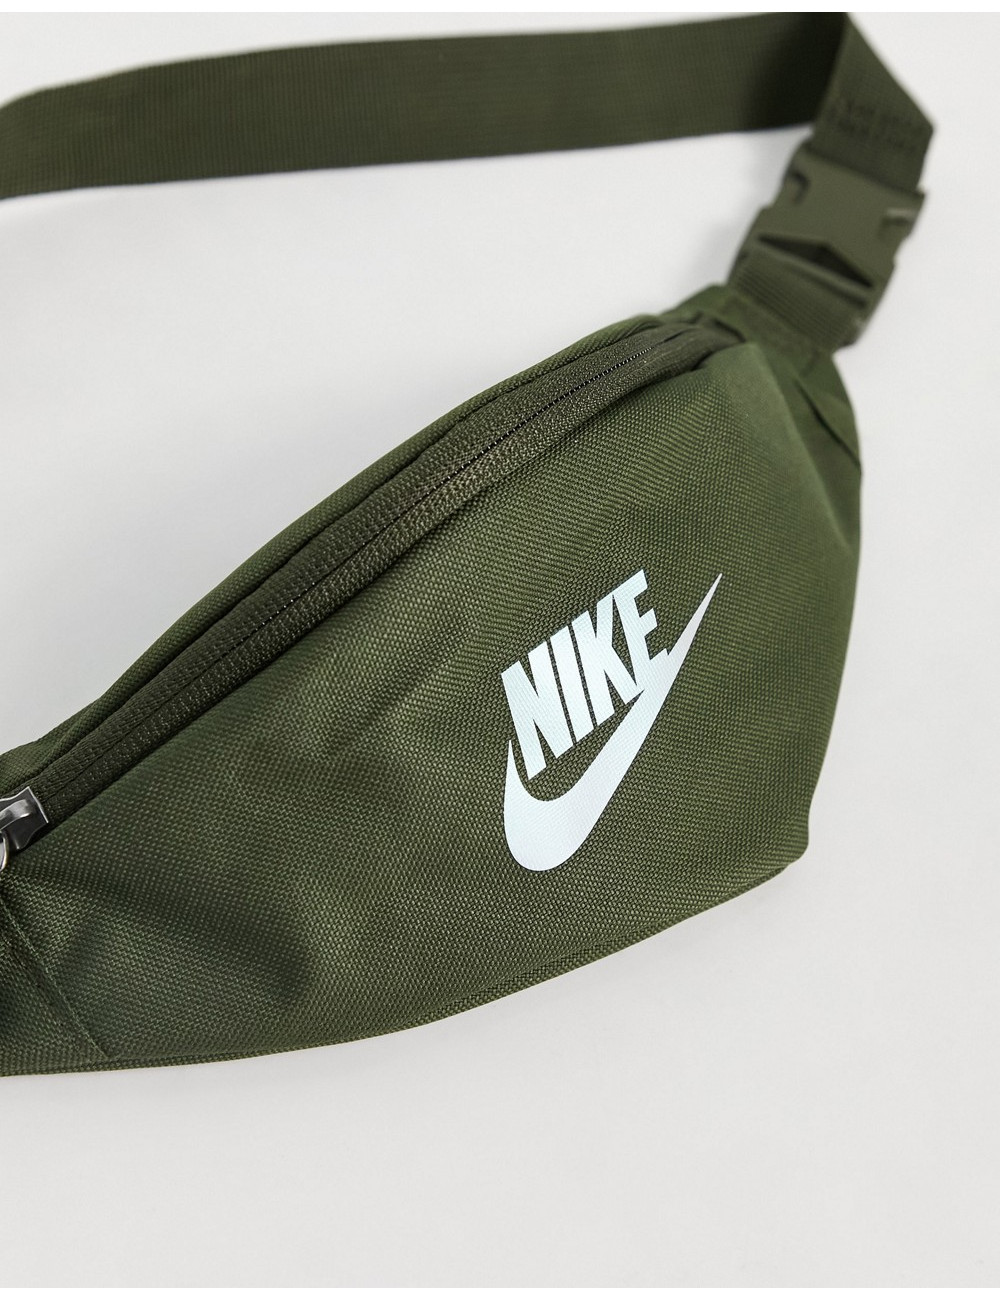 Nike Heritage bum bag with...